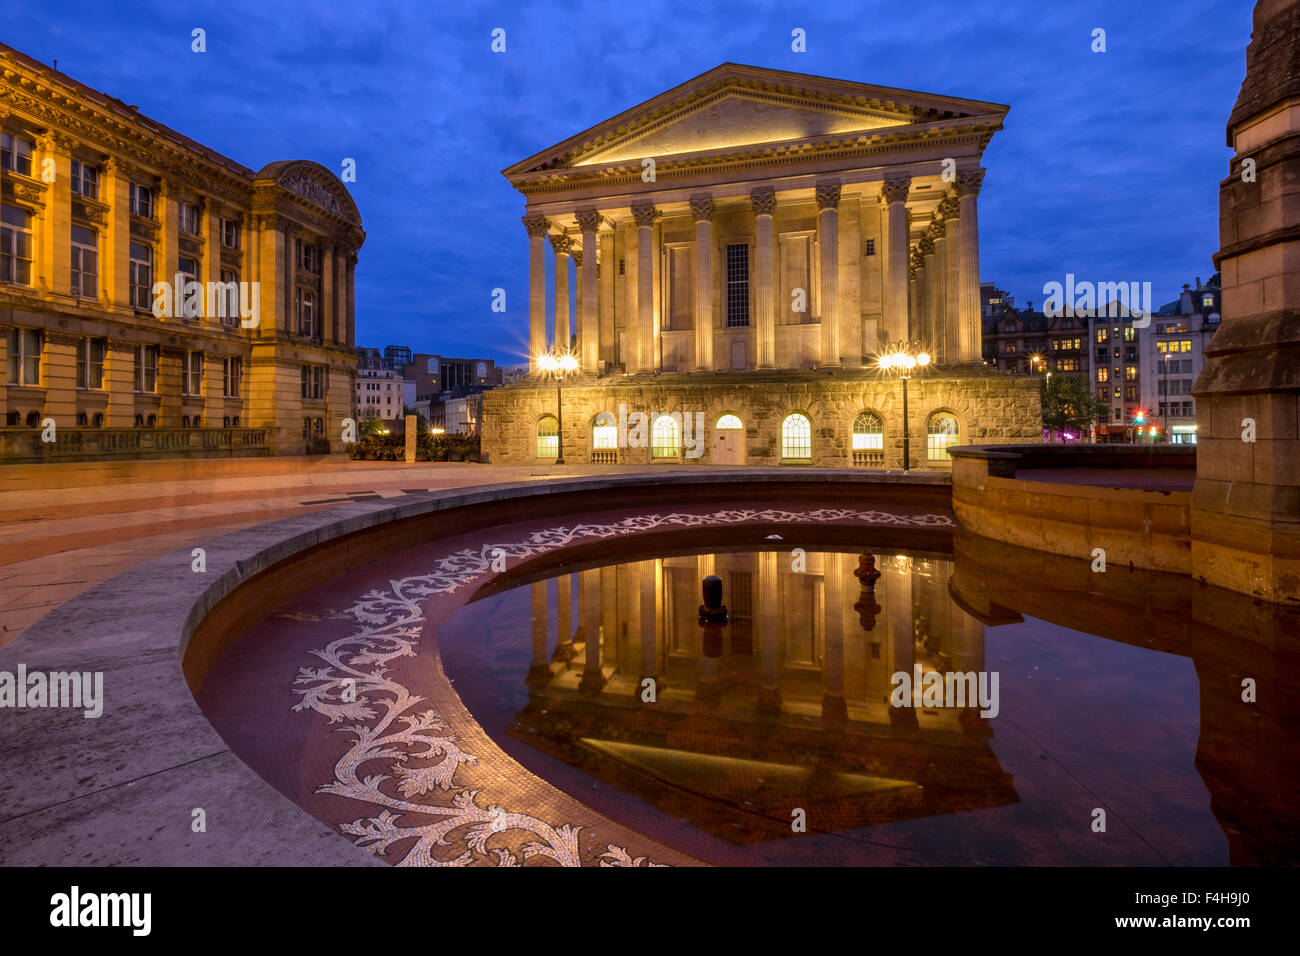 The Town Hall at night, Chamberlain Square, Birmingham, England, UK. Stock Photo